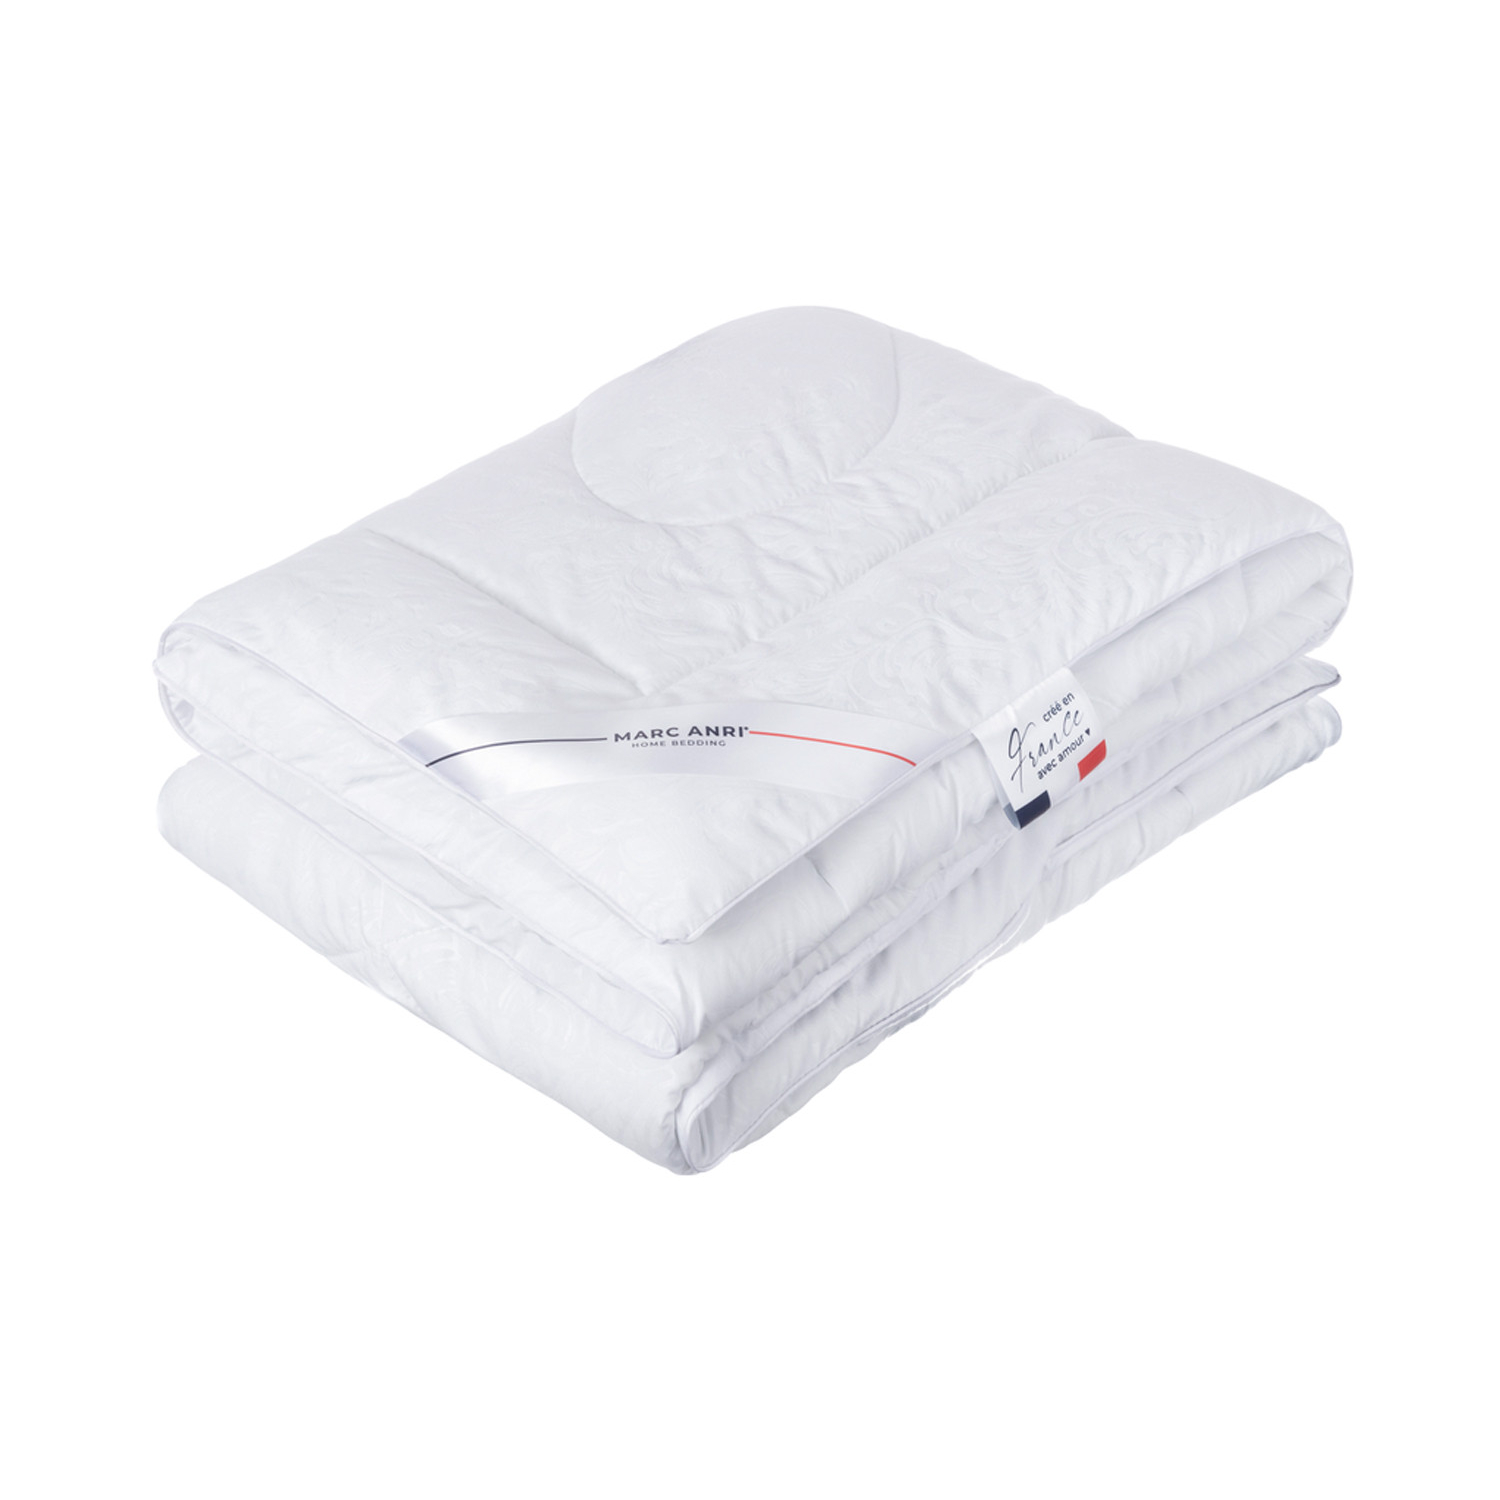 Одеяло Marc Anri Chinon белое 200х220 см (MA-MF) одеяло marc anri barr белое 140х200 см ma dc